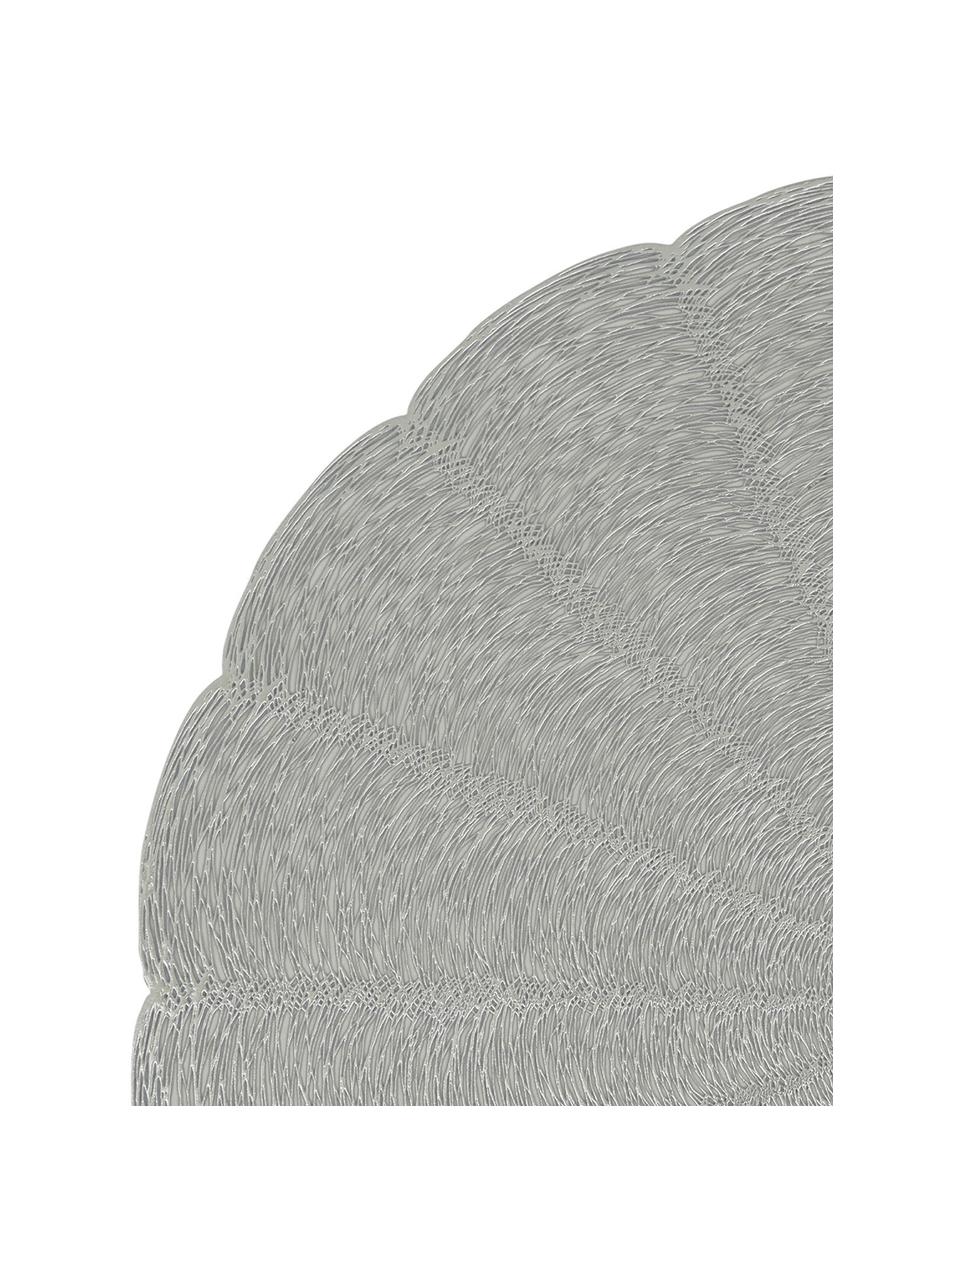 Kulatá prostírání Lumi, 2 ks, Umělá hmota, Stříbrná, Ø 38 cm